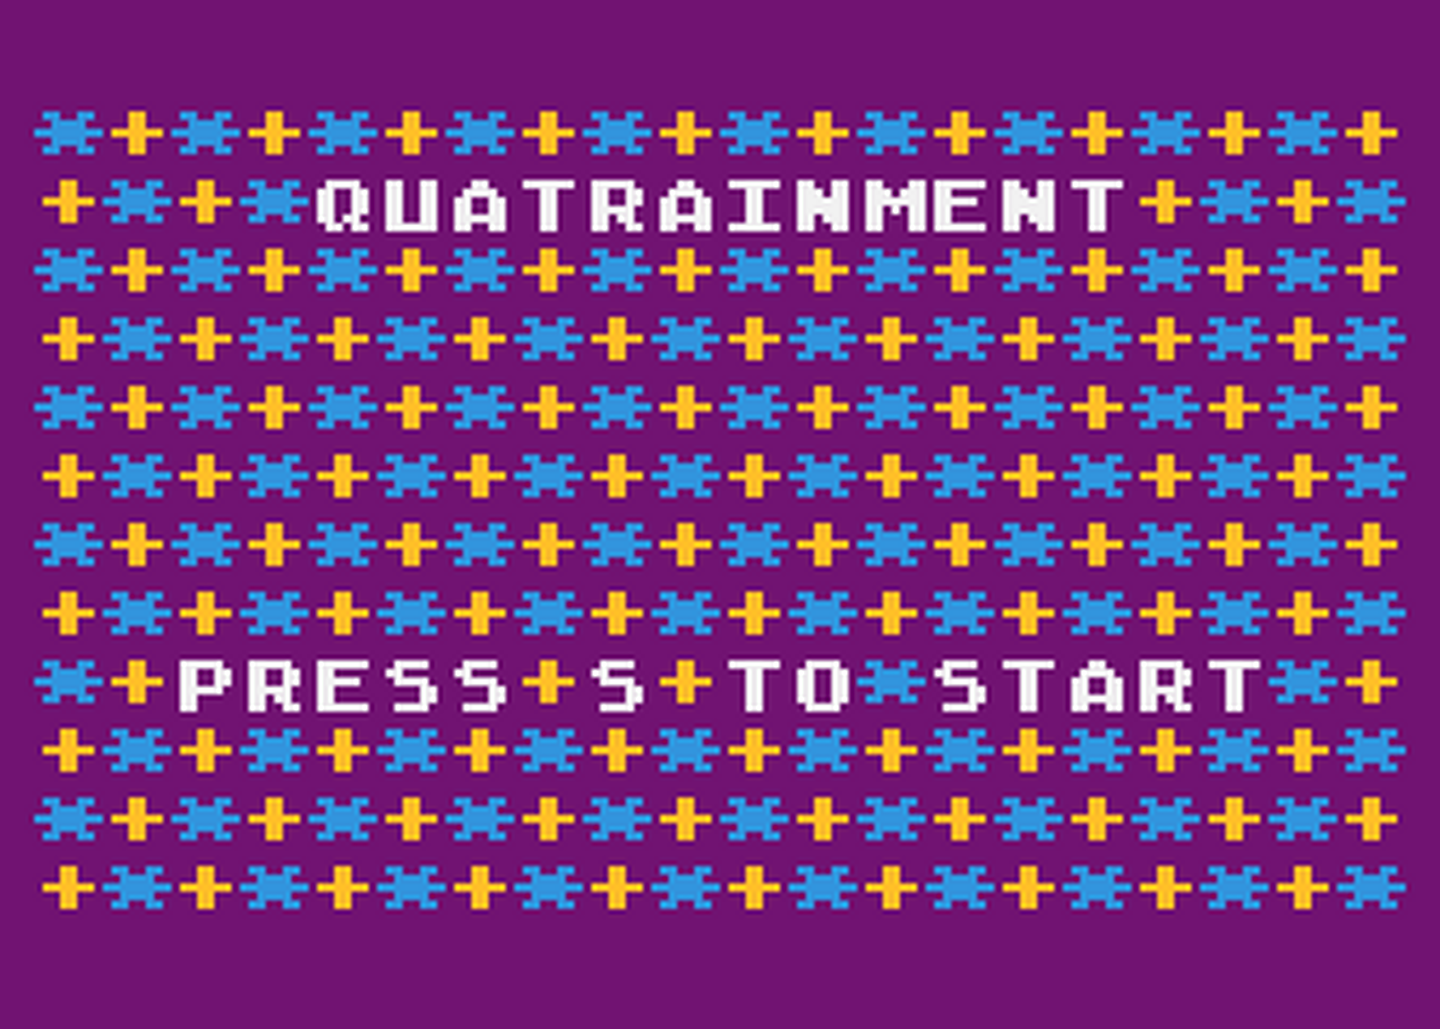 Atari GameBase Quatrainment (No_Publisher)